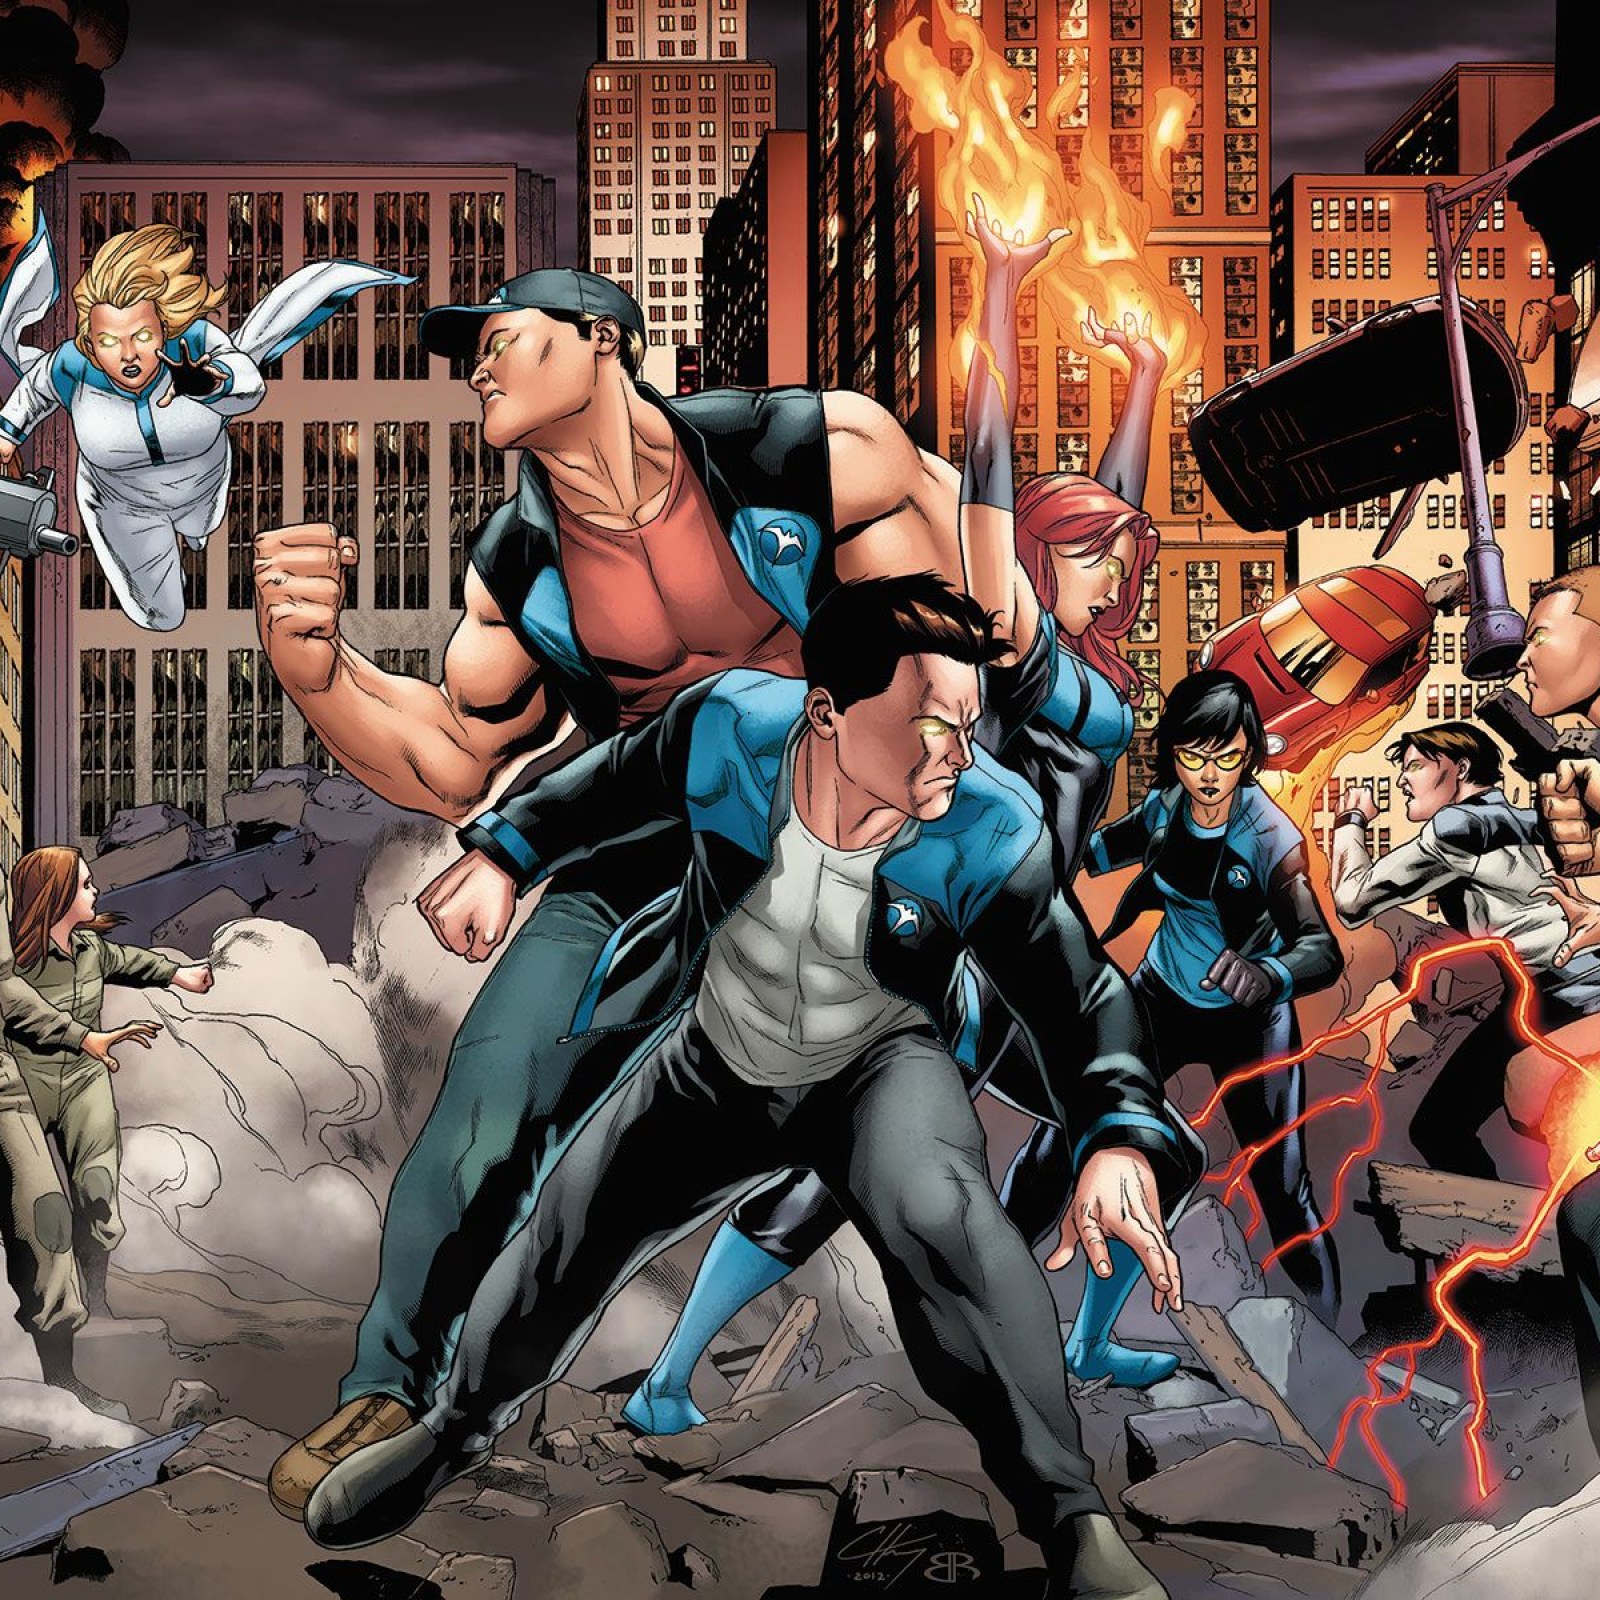 Valiant entertainment wants to break the marvel dc ics duopoly on superhero film genre